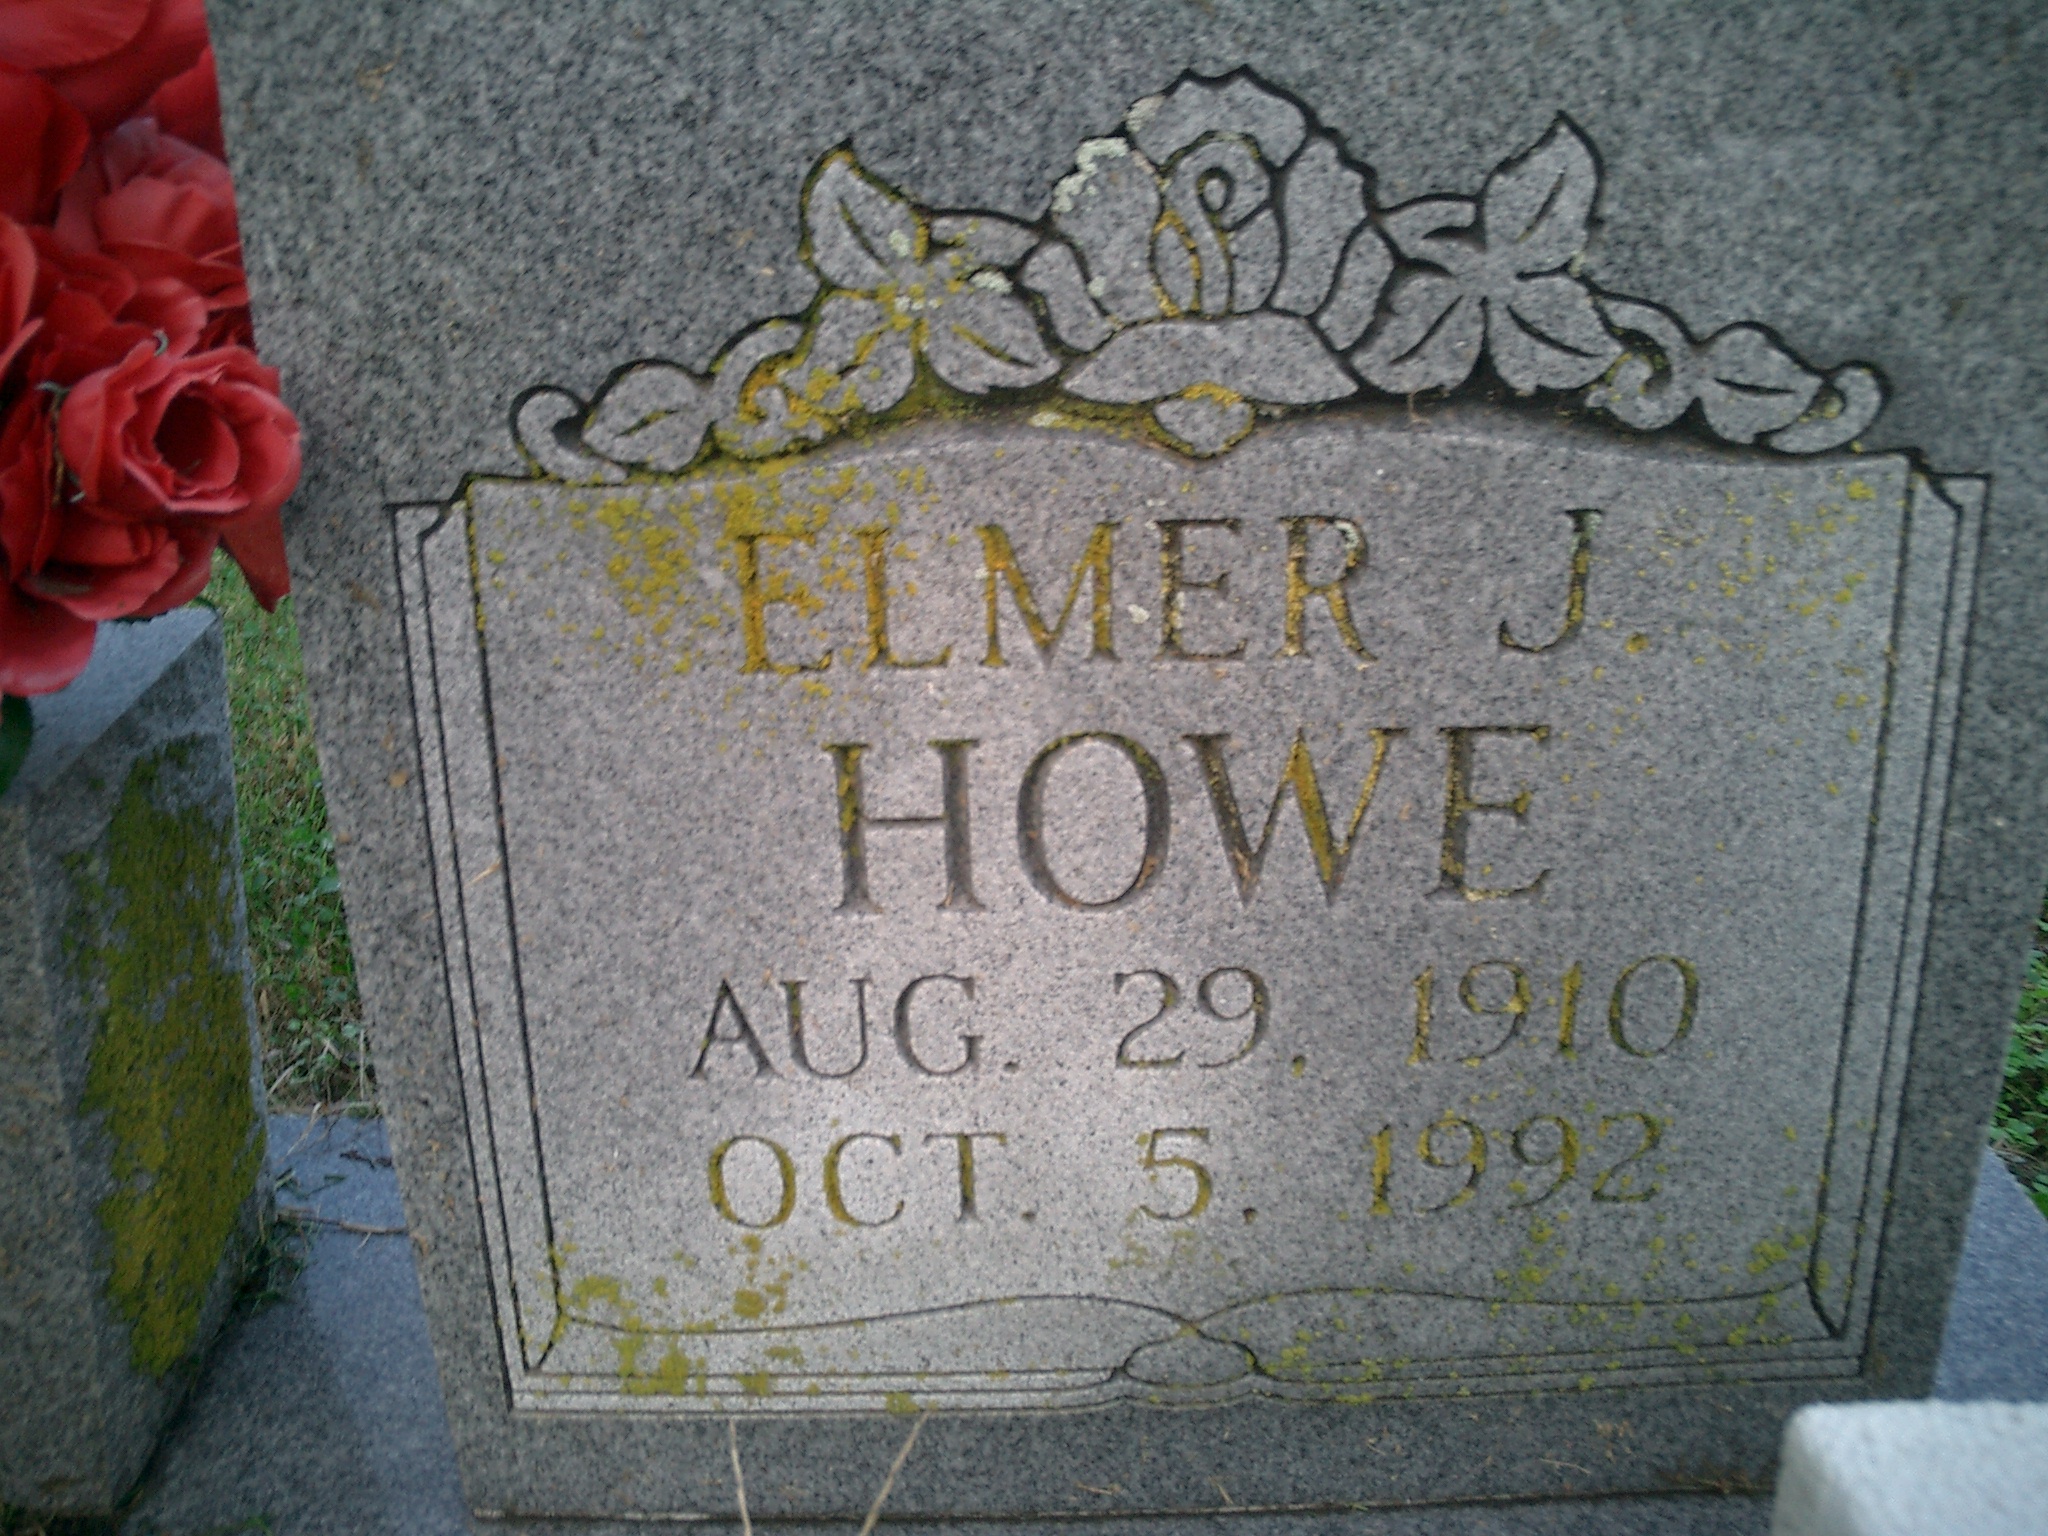 Elmer James Howe (1910-1992)